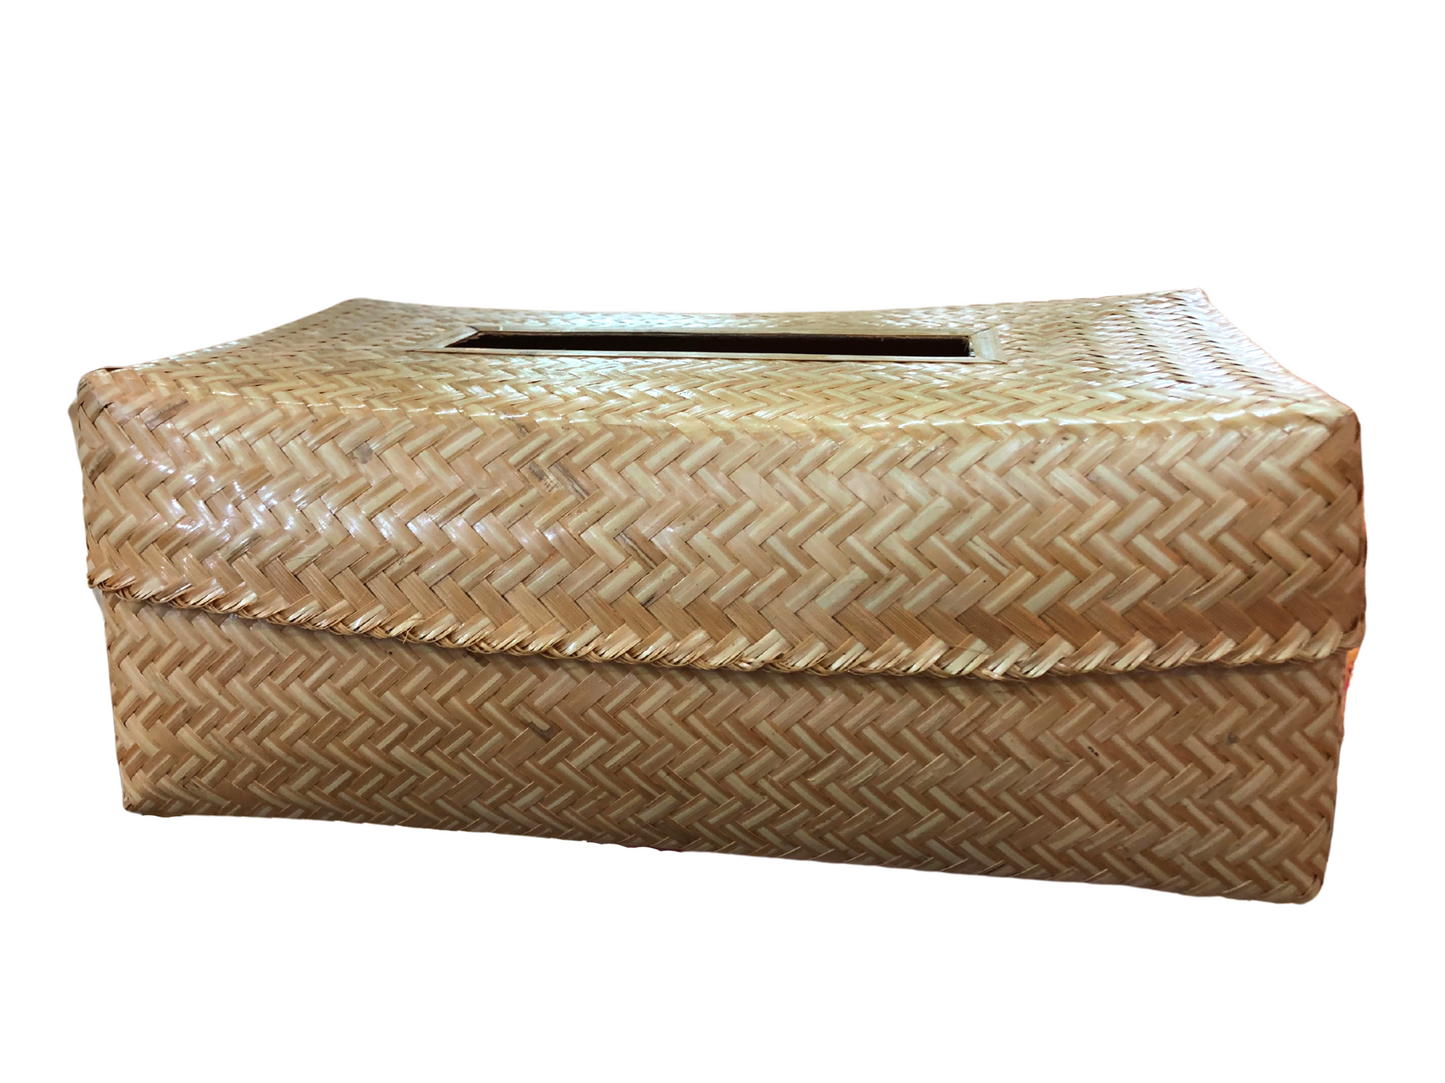 C600030001-Thailand pure handmade rattan rectangular surface carton